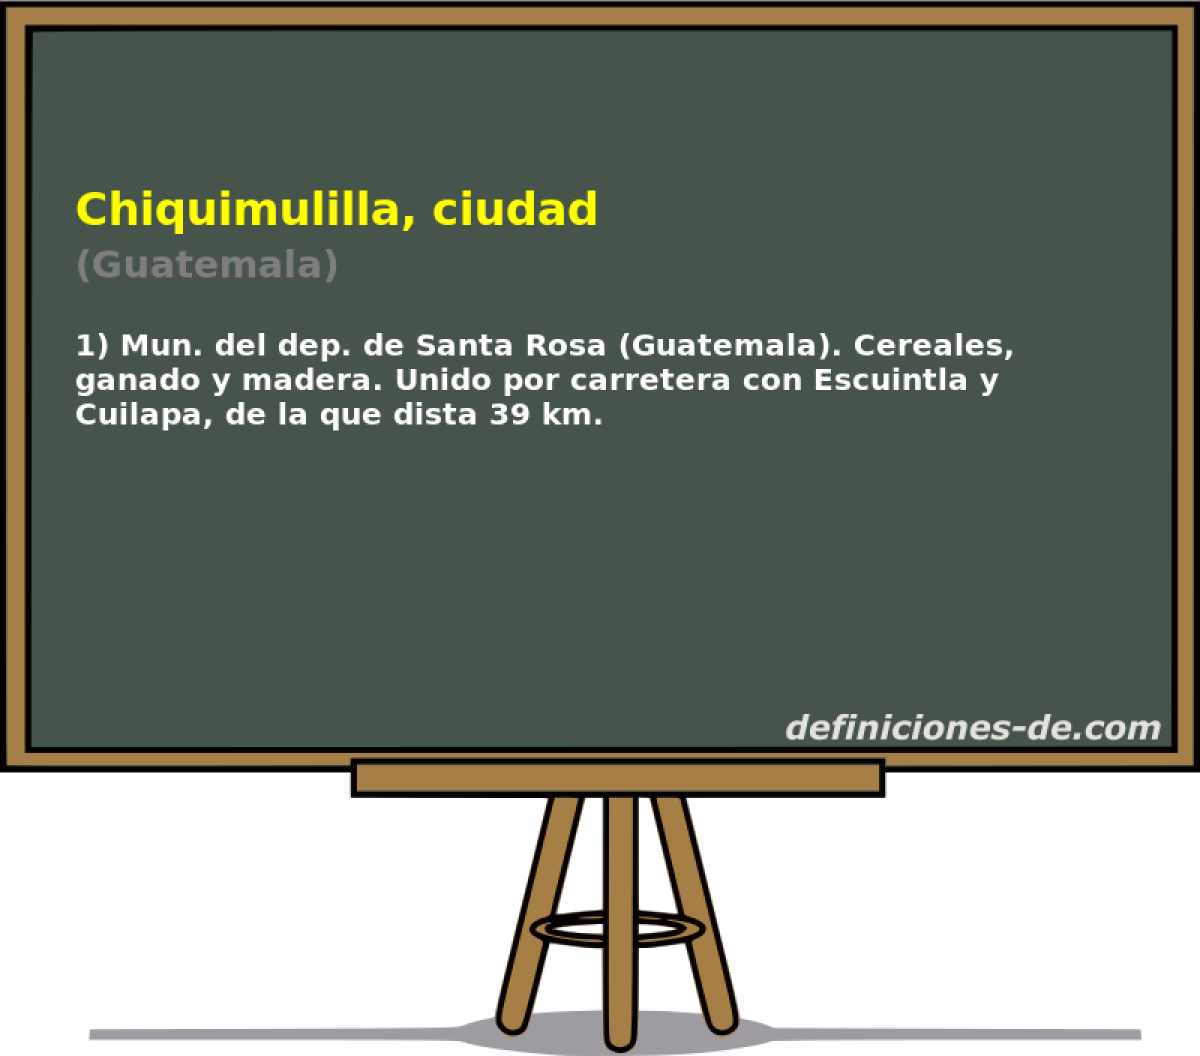 Chiquimulilla, ciudad (Guatemala)